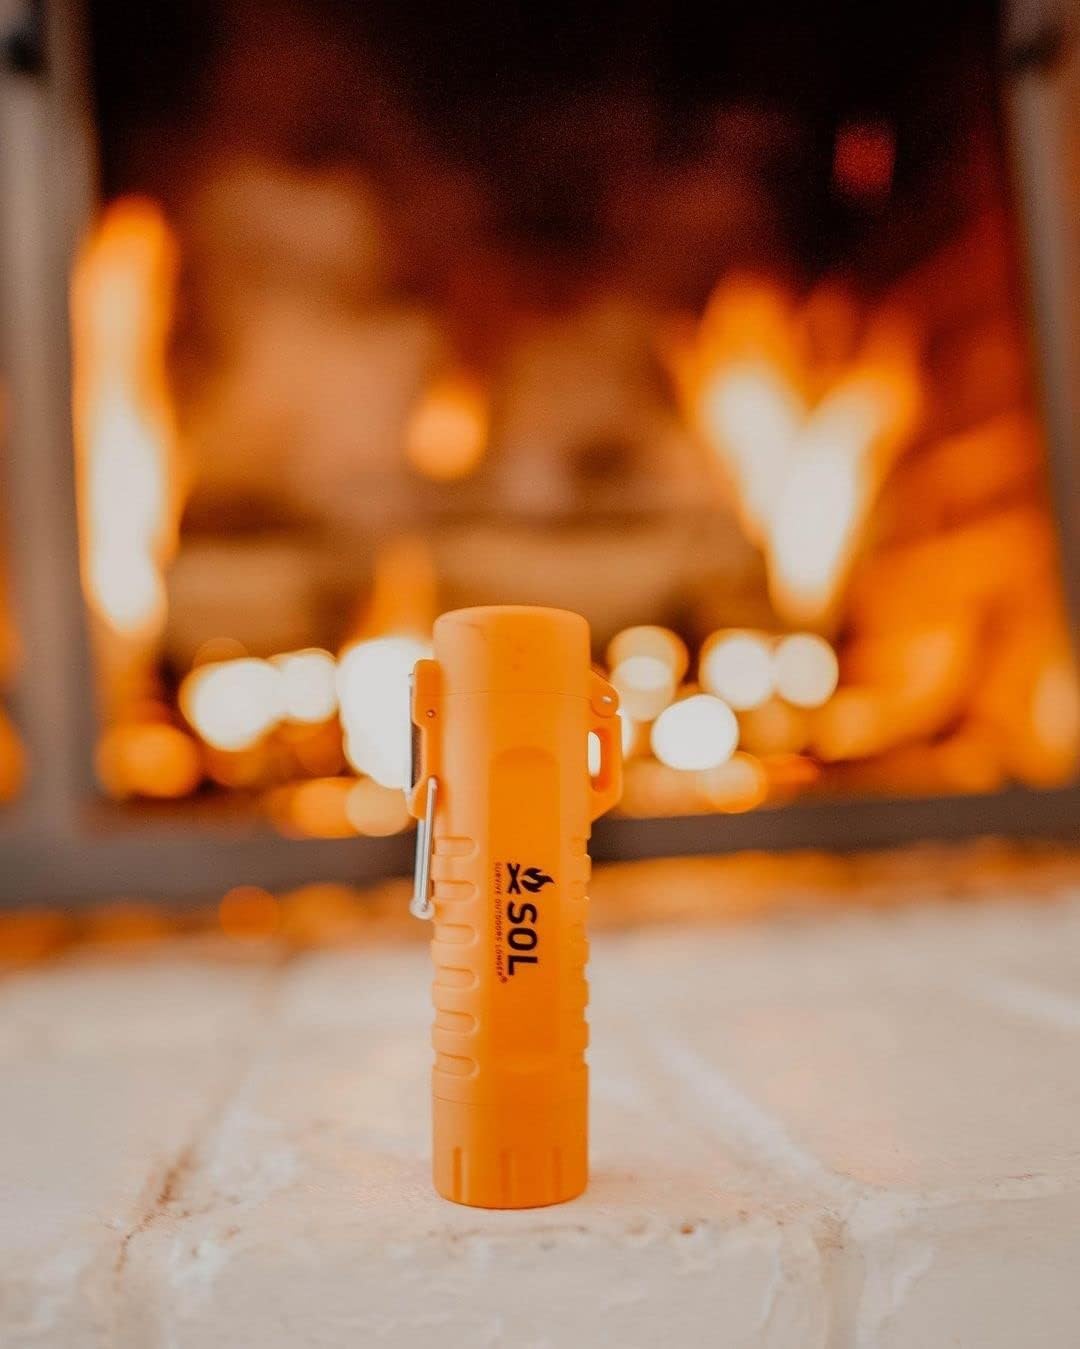 Survive Outdoors Longer Fire Lite Fuel Free Rechargeable Lighter Orange